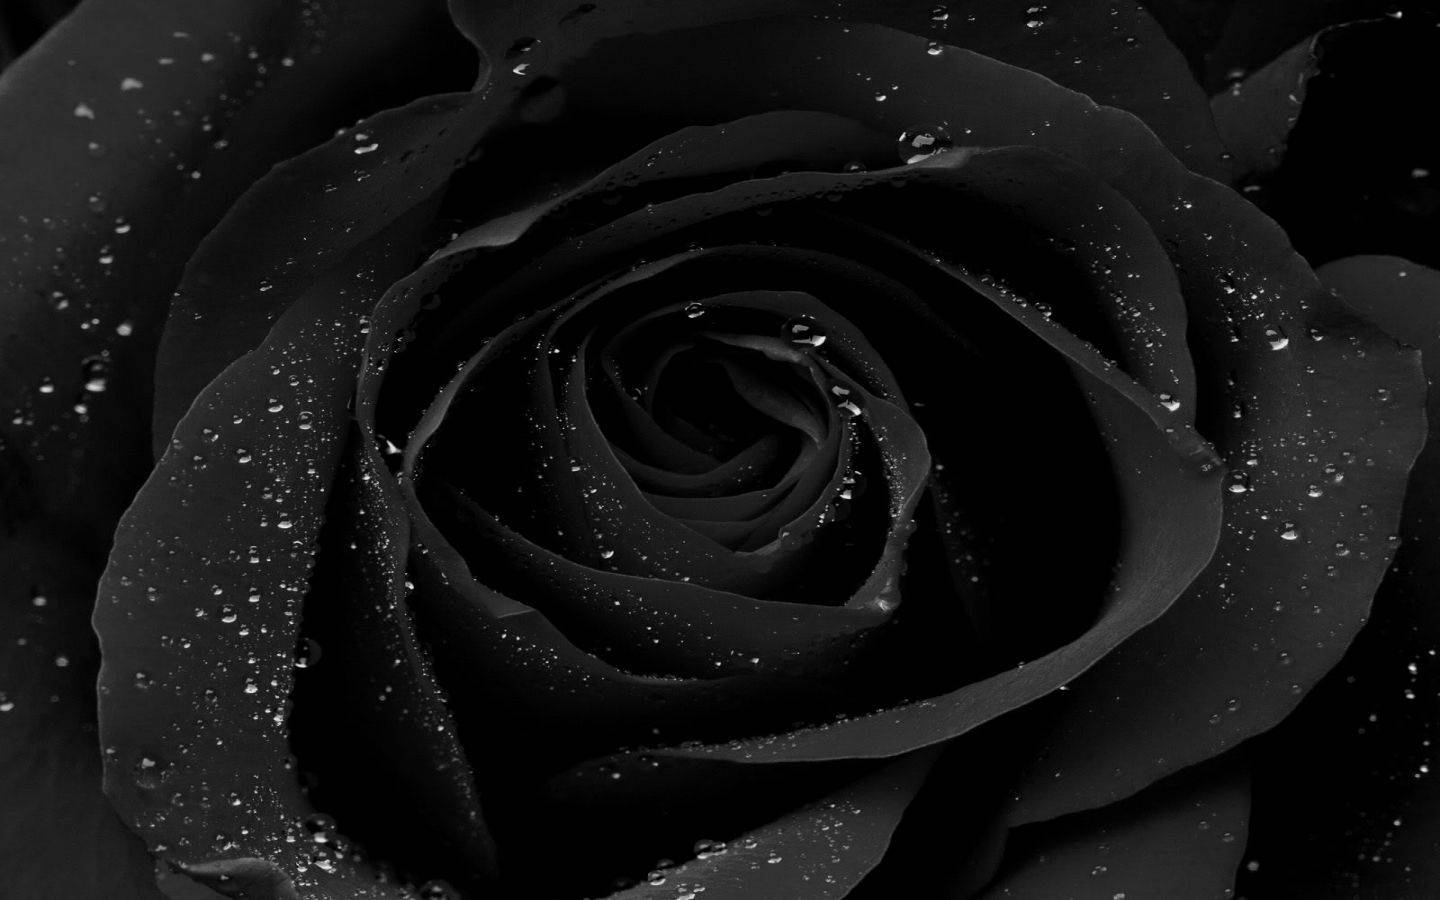 Water Droplets On Black Rose